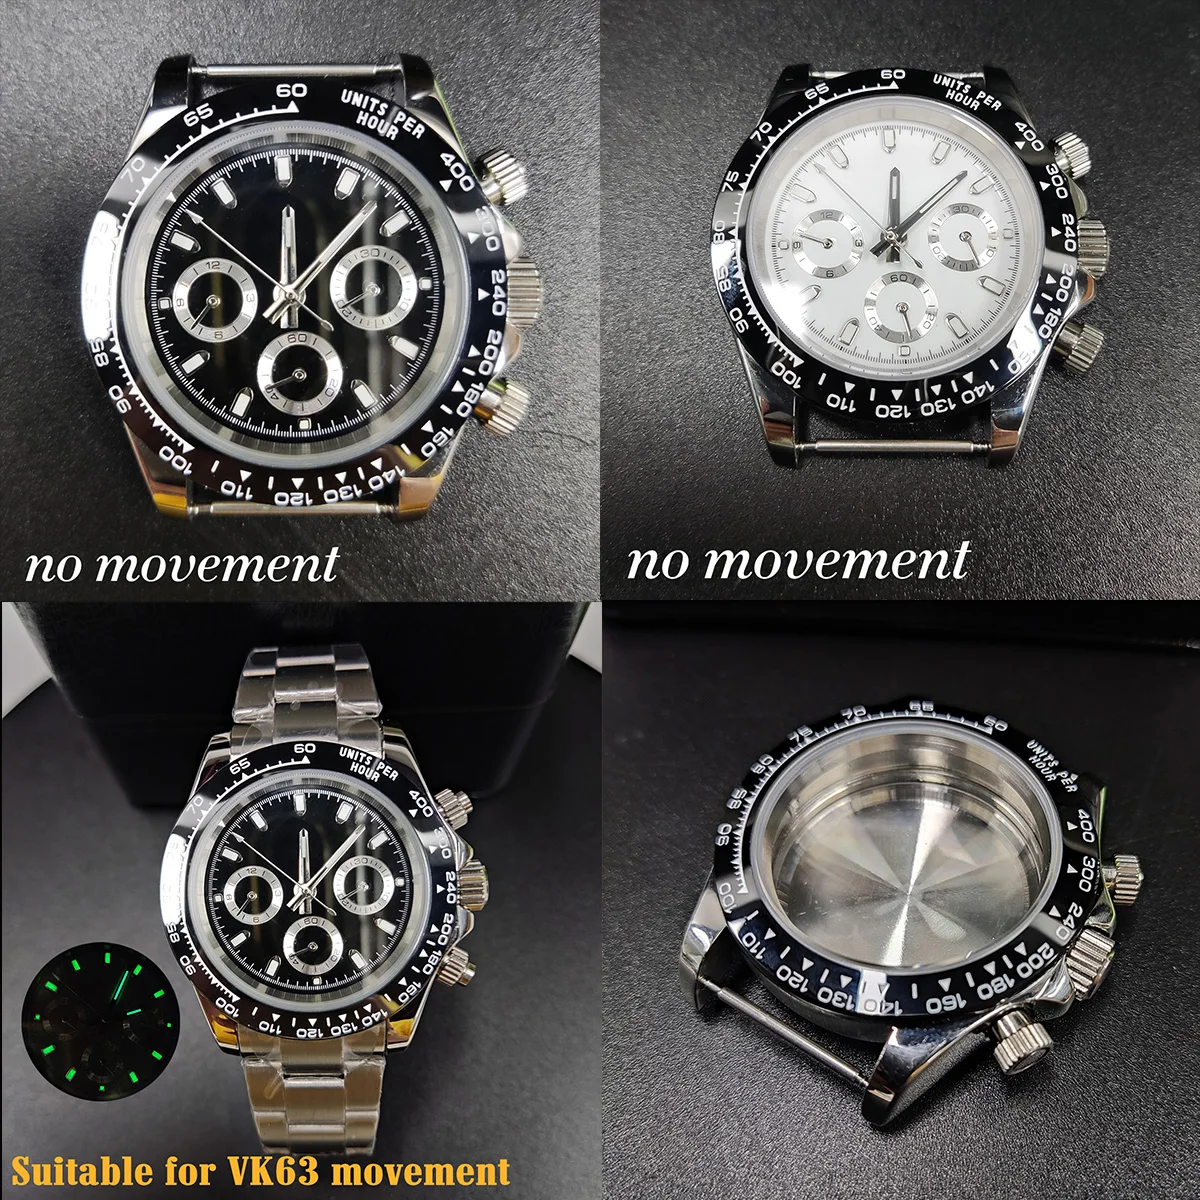 

39 мм чехол VK63 чехол японский кварцевый VK63 Move men t мужские часы Seiko nh35 чехол циферблат хронограф электронные многофункциональные часы